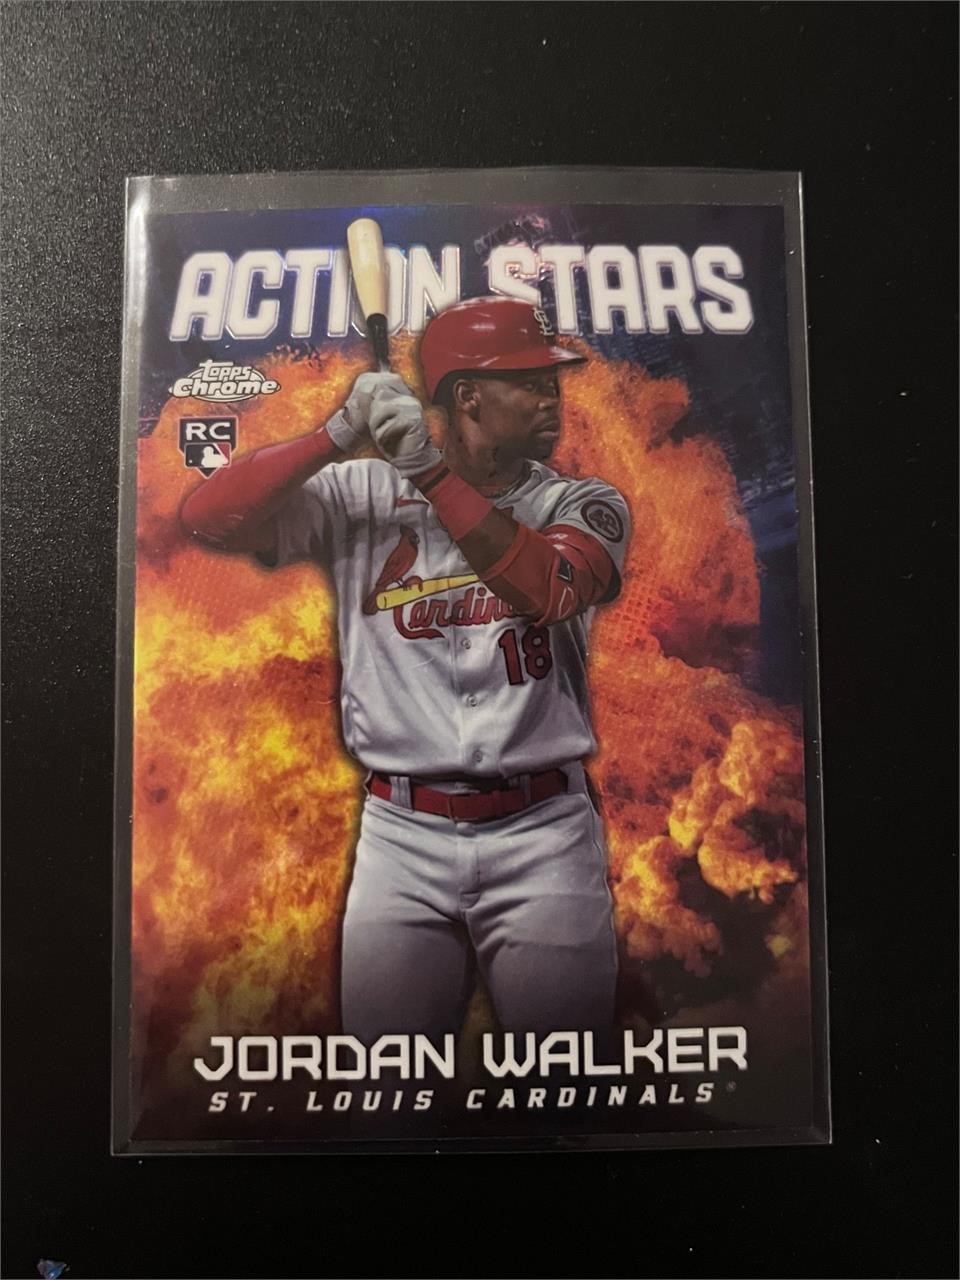 Jordan Walker Action Stars Rookie Card